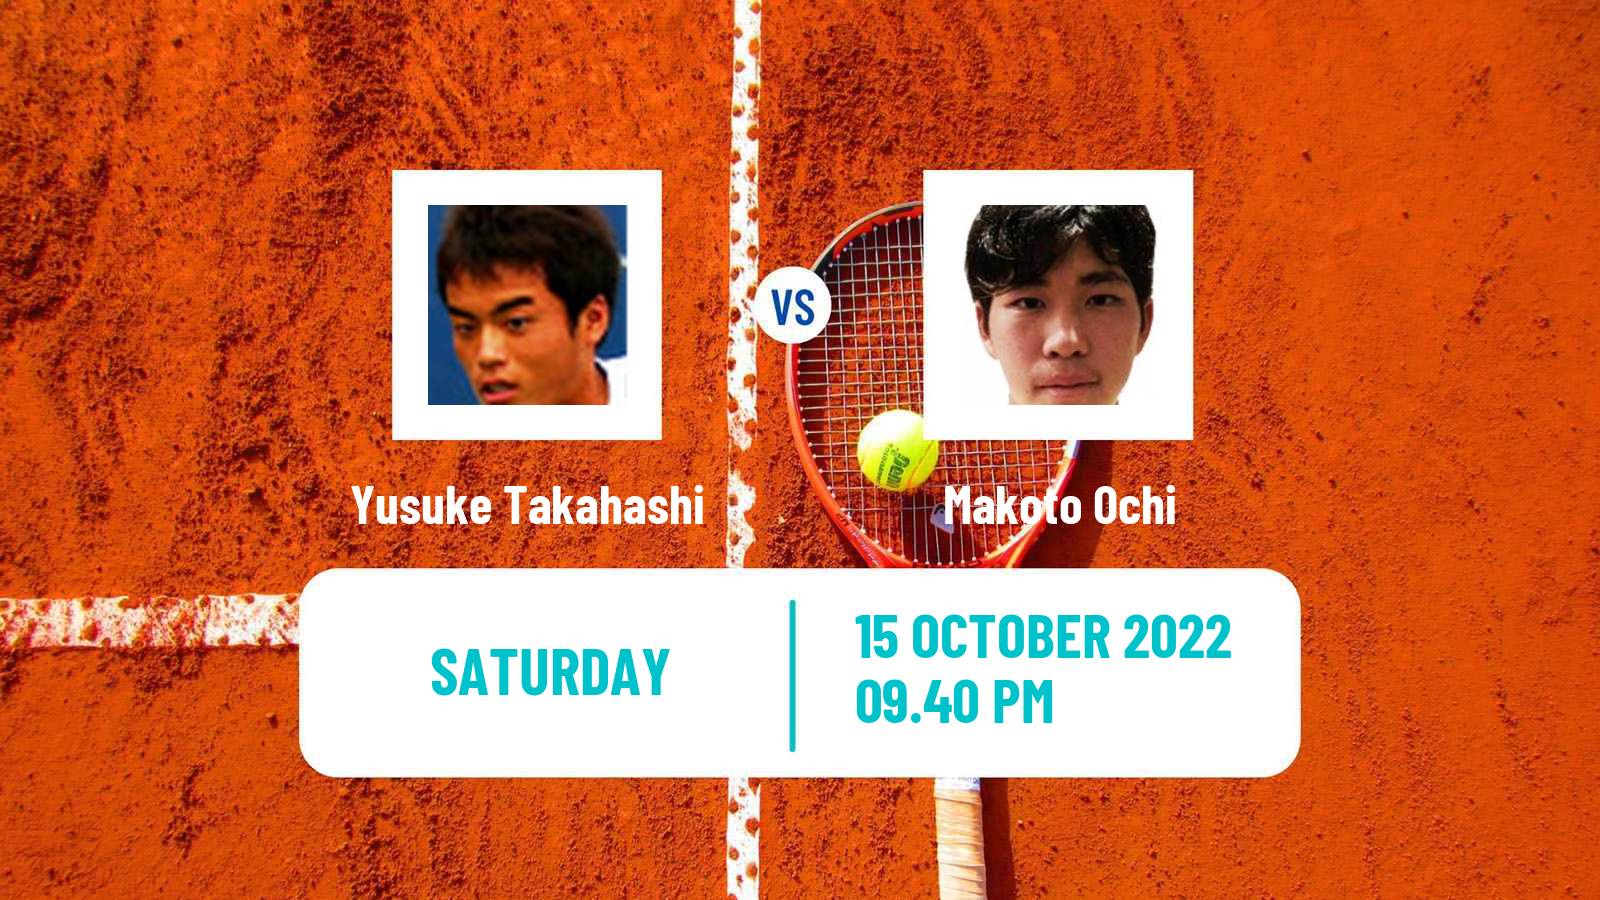 Tennis ATP Challenger Yusuke Takahashi - Makoto Ochi